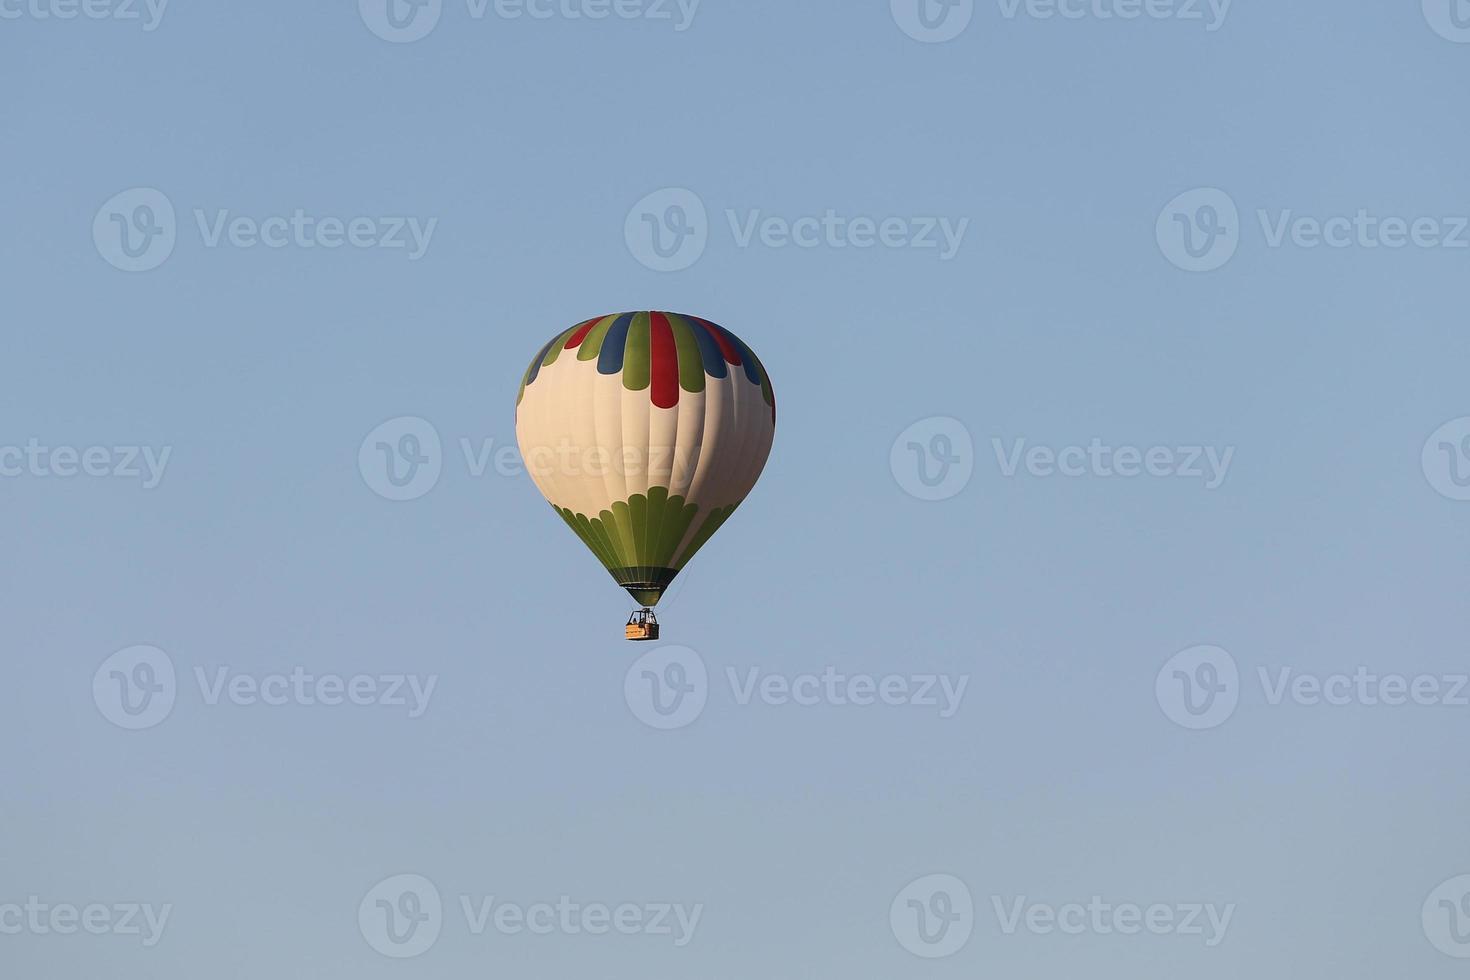 Hot Air Balloon Over Goreme Town photo